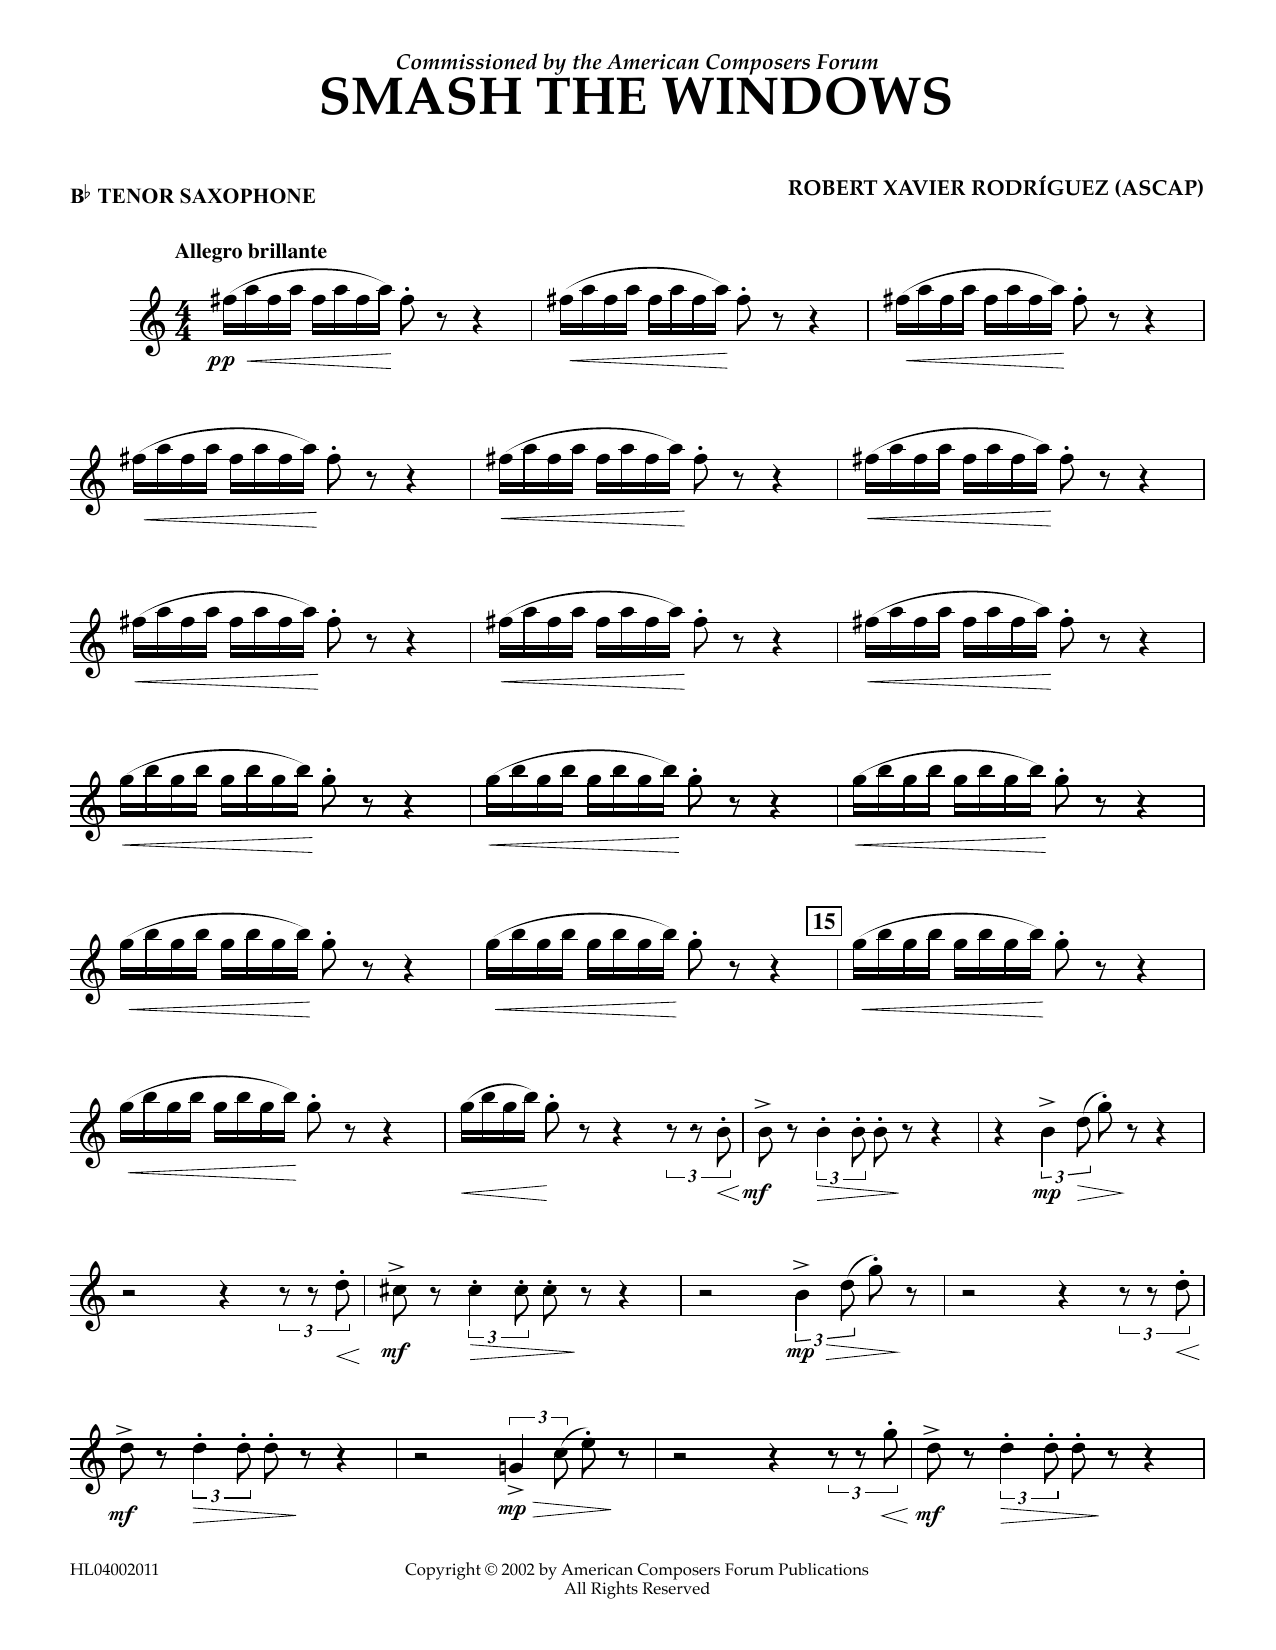 Robert Xavier Rodríguez Smash the Windows - Bb Tenor Saxophone Sheet Music Notes & Chords for Concert Band - Download or Print PDF